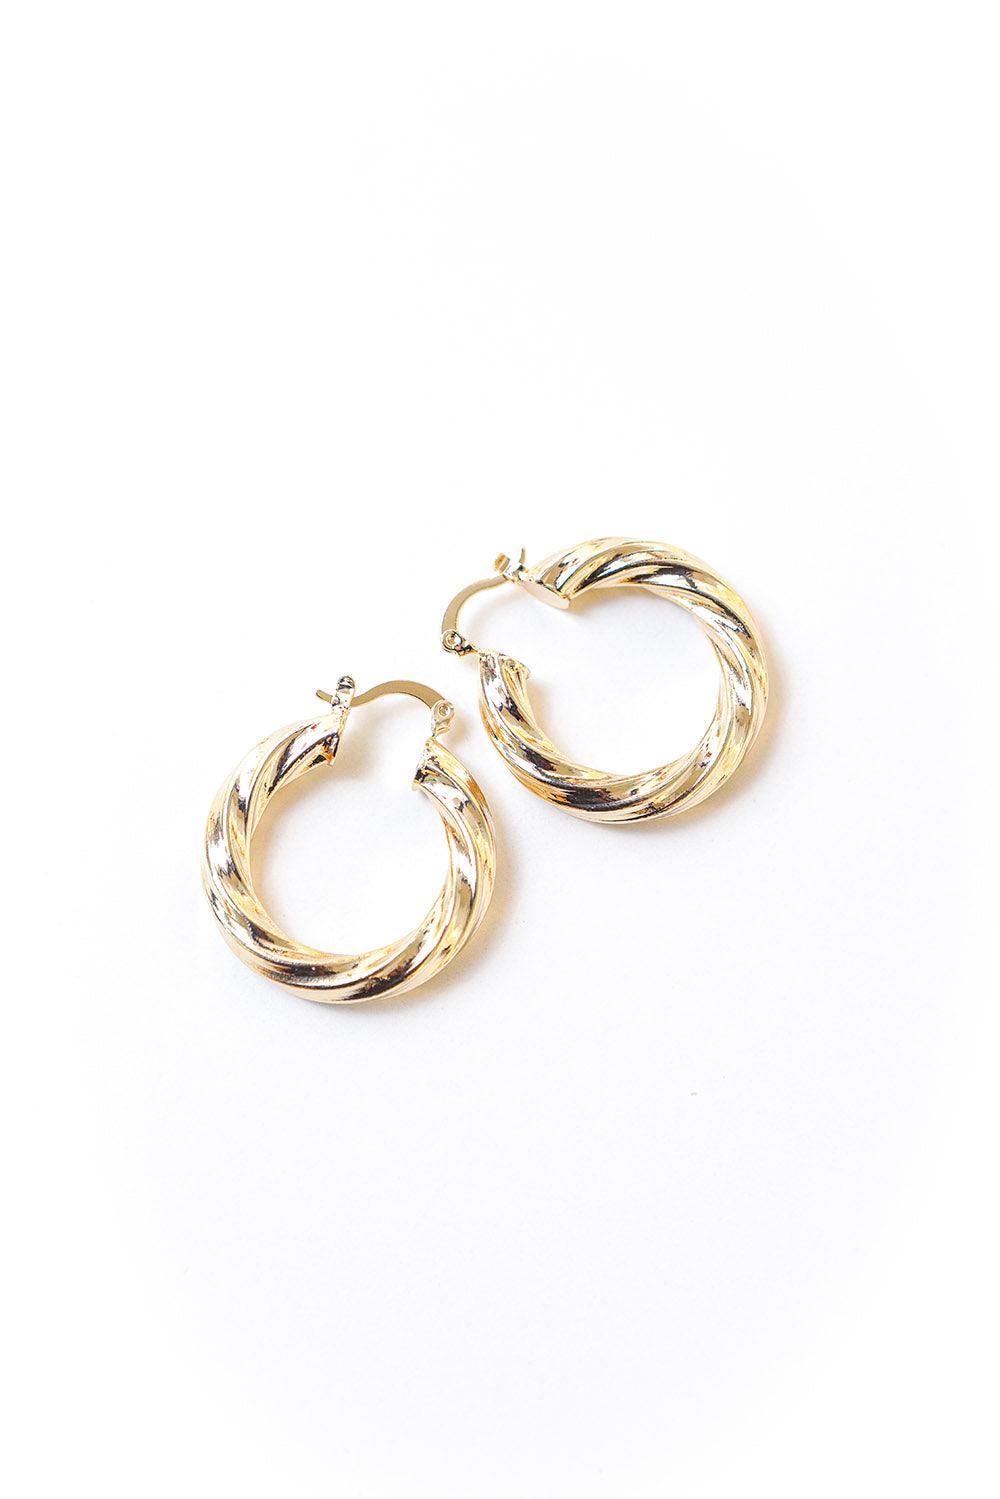 Gold tone twisted huggie earrings with secure hinge enclosure. 35mm diamter